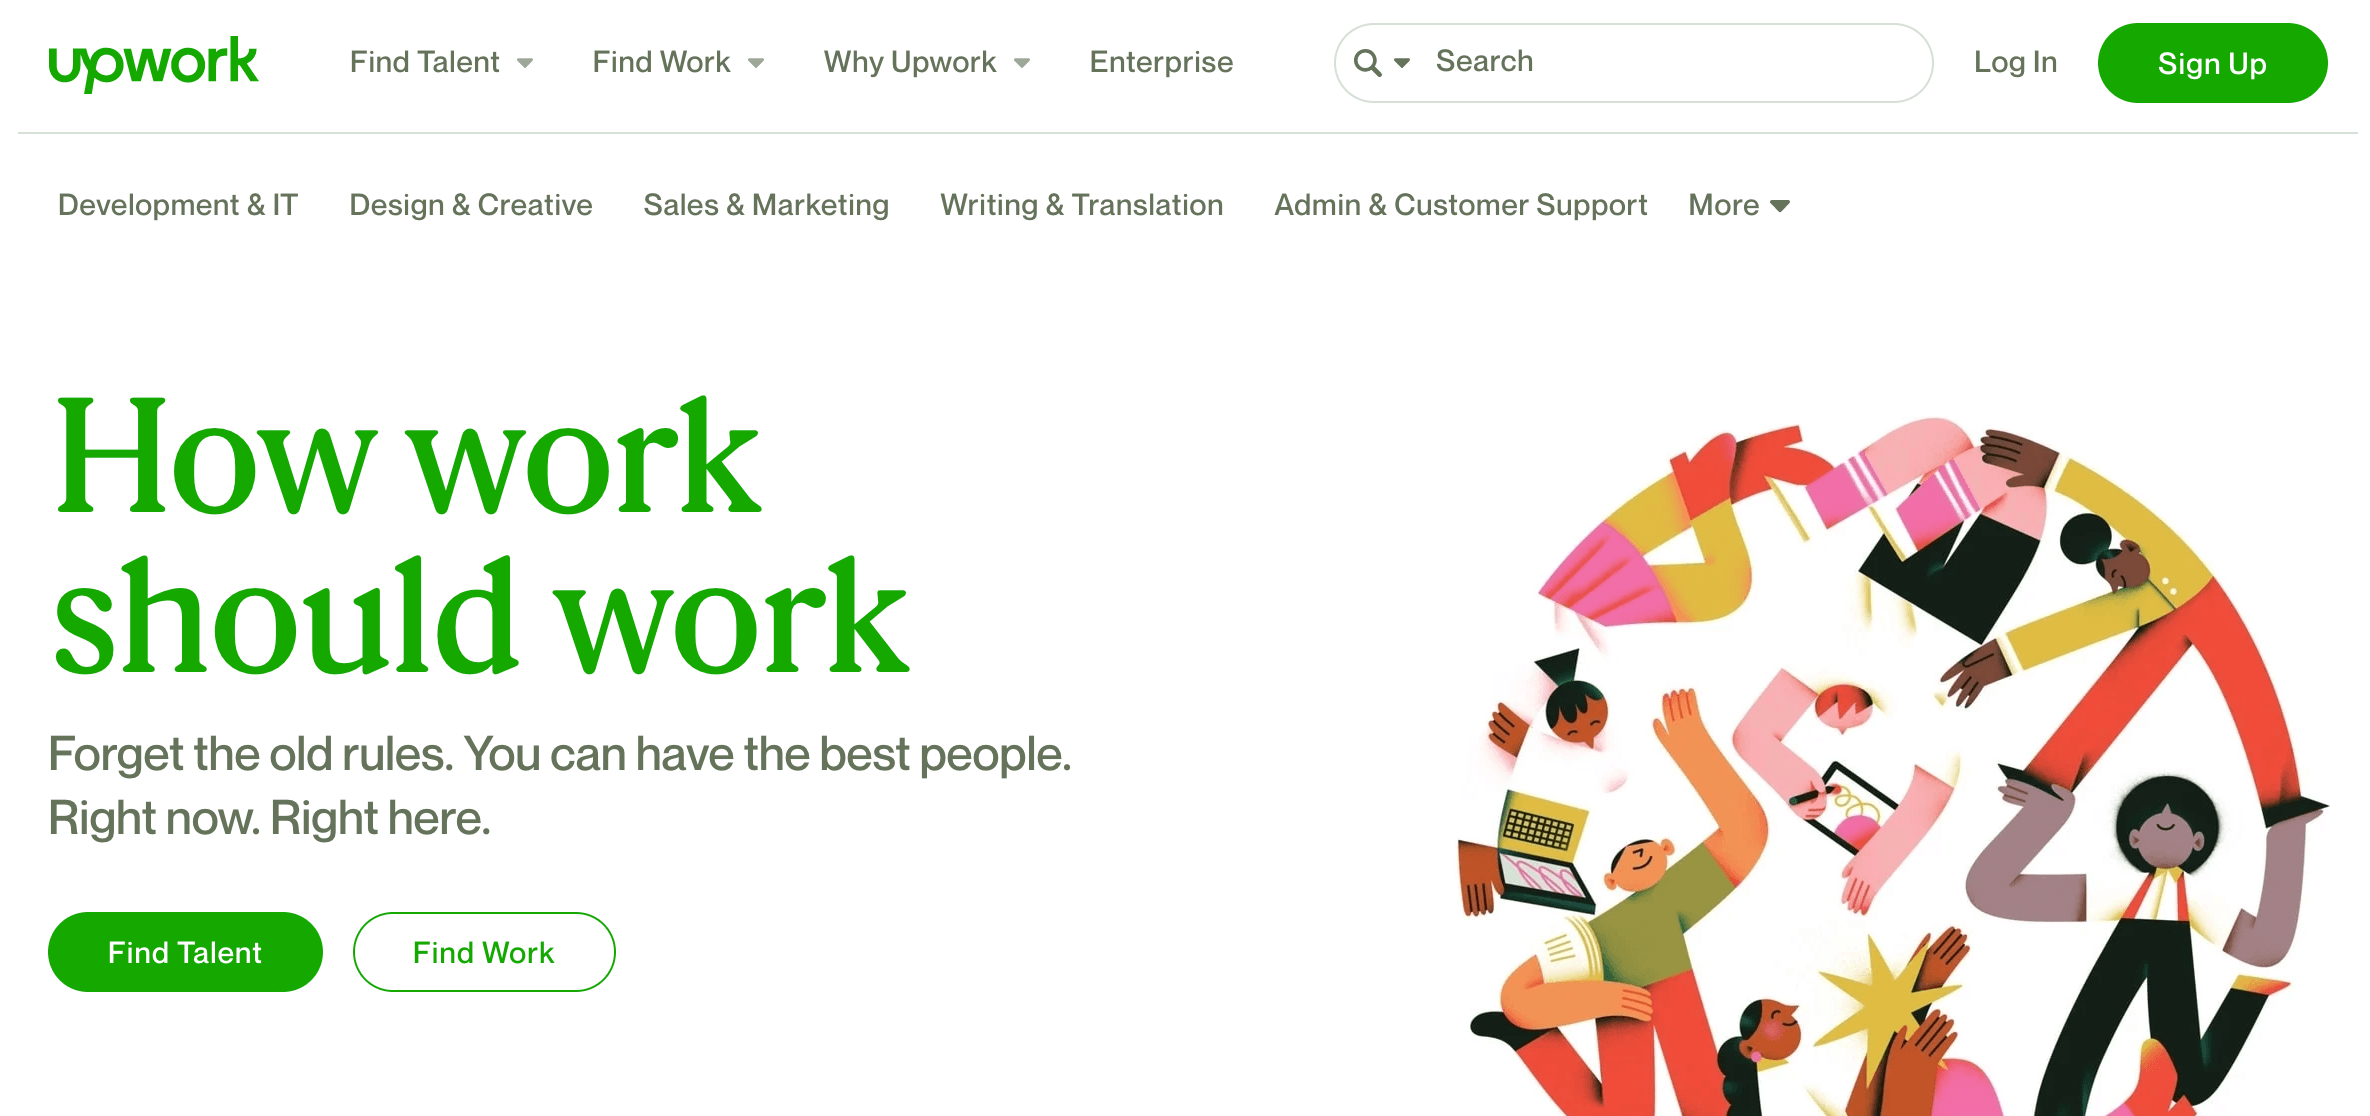 Upwork, one of the best freelance websites